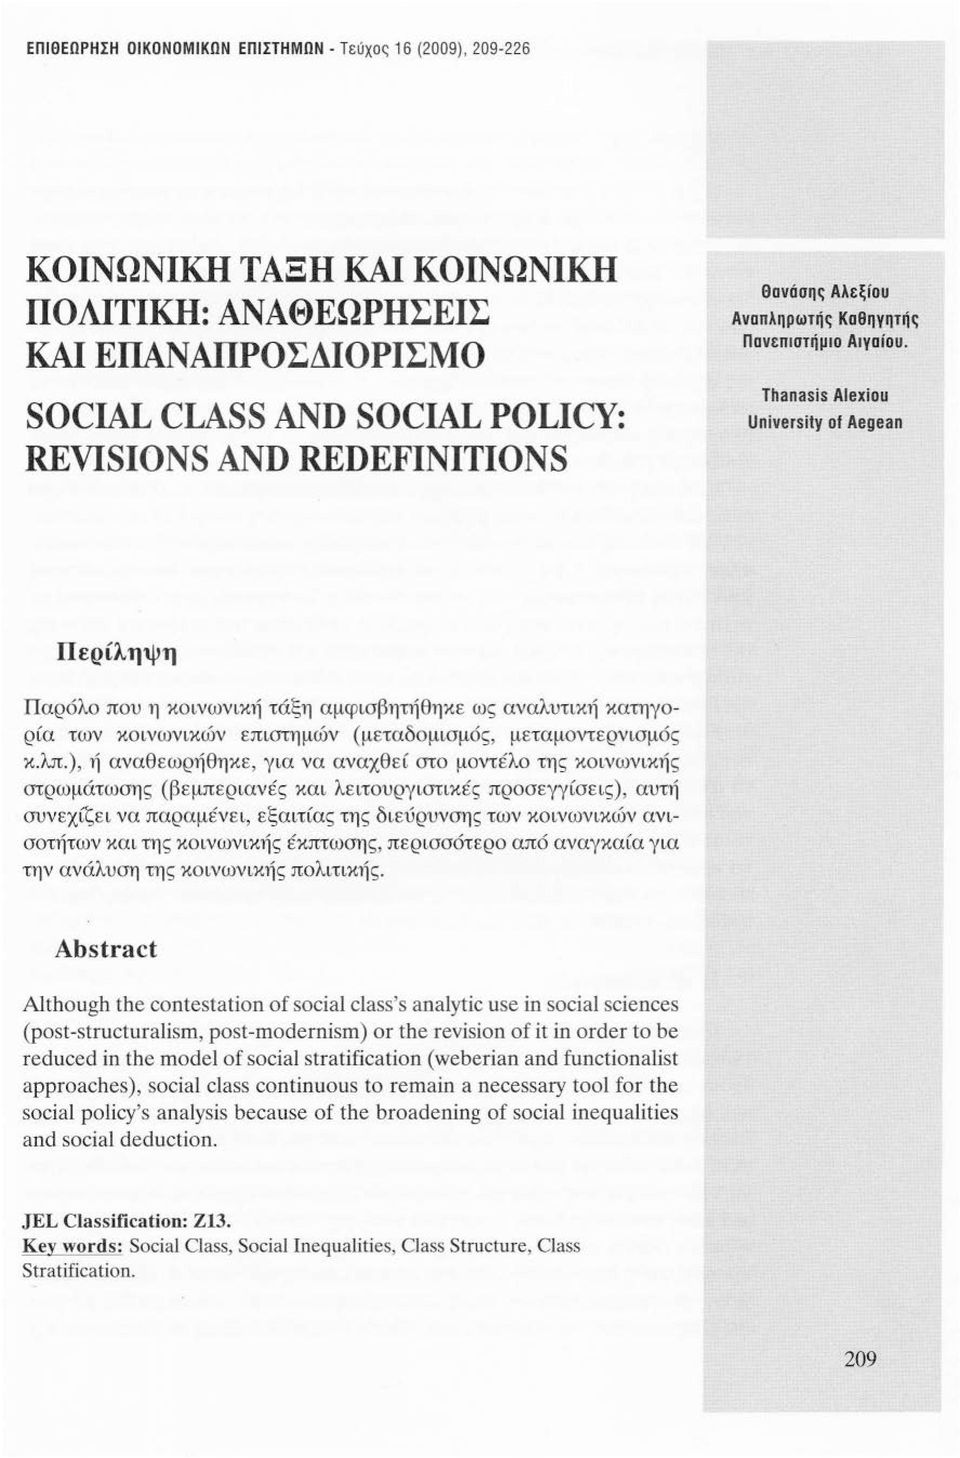 Thanasis Alexiou Uniνersity of Aegean Περίληψη Παρόλο που η κοινωνική τάξη αμφισβητήθηκε ως αναλυτική κατηγορία των κοινωνικών επ ιστημών (μεταδομισμός, μεταμοντερνισμός κ.λπ.